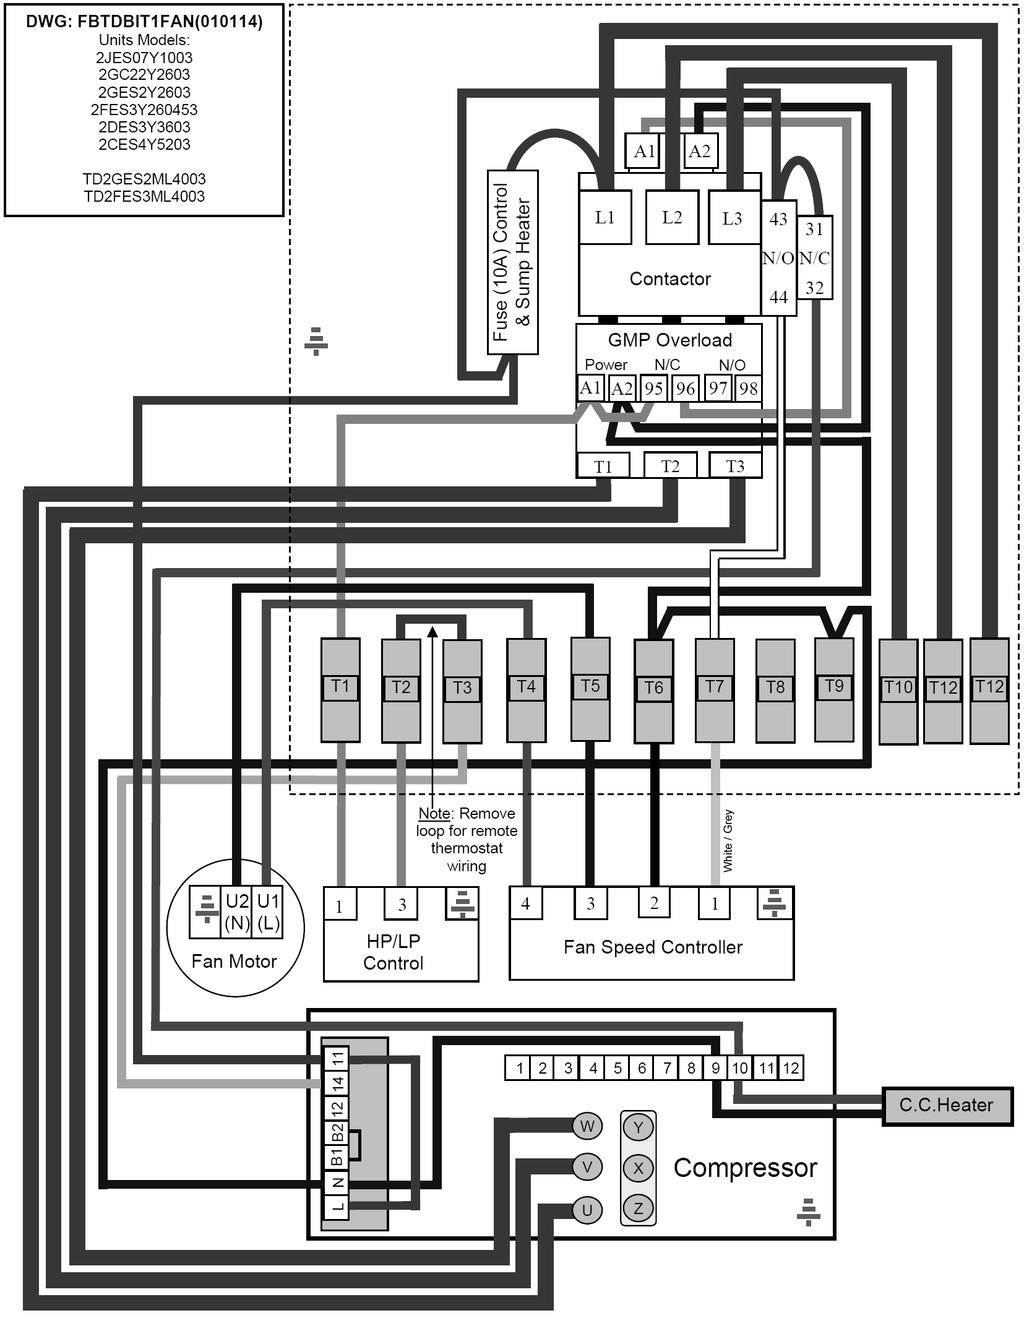 Semi-Hermetic Flat Base Unit Wiring Diagrams